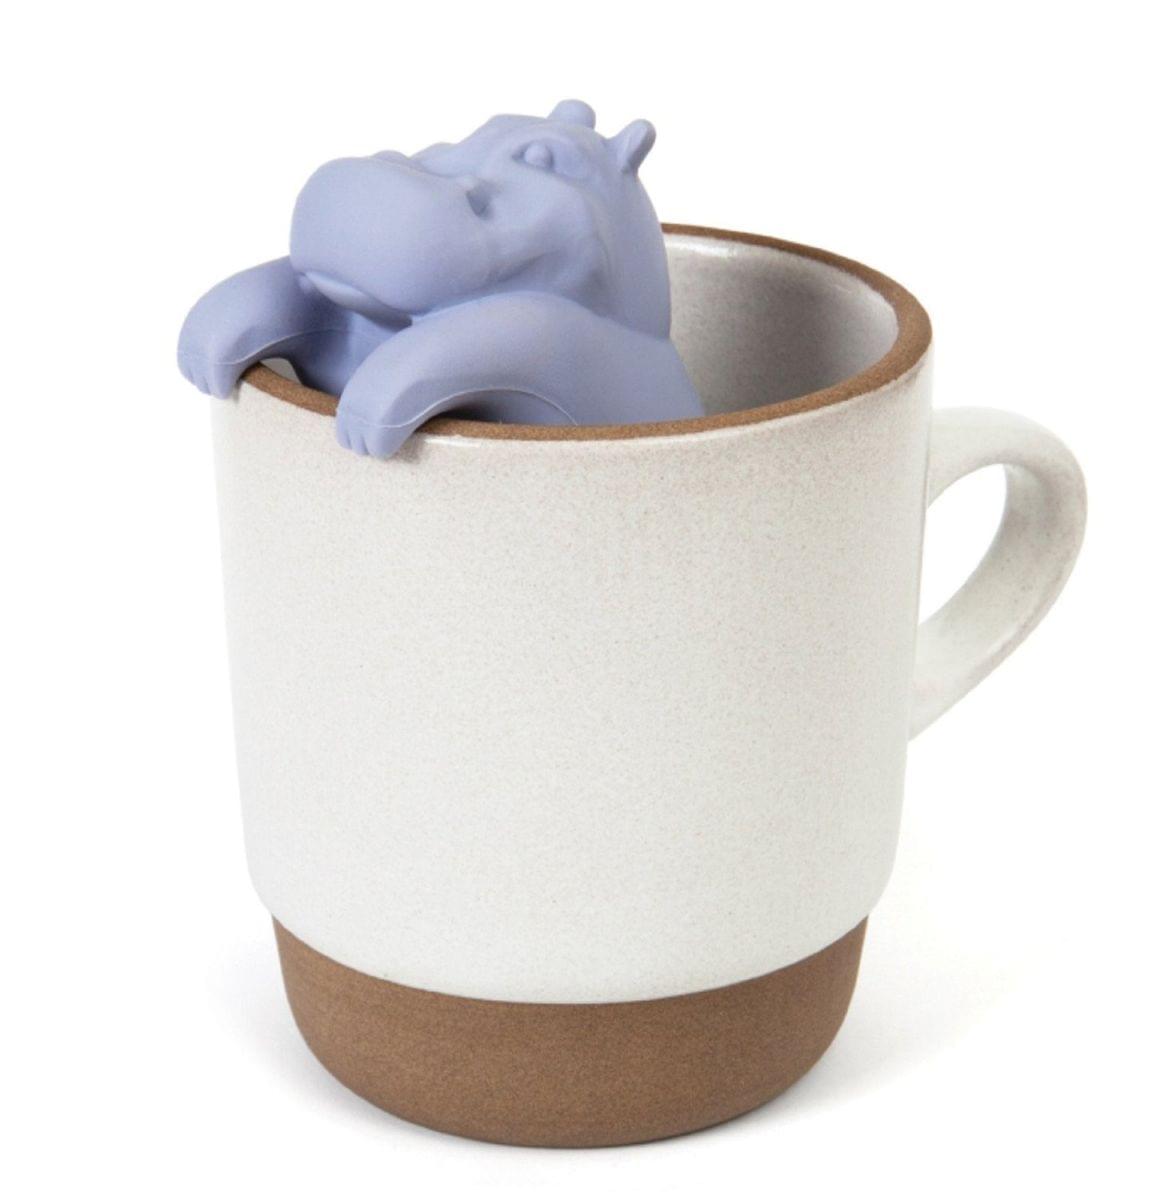 Hippo Tea Steeper